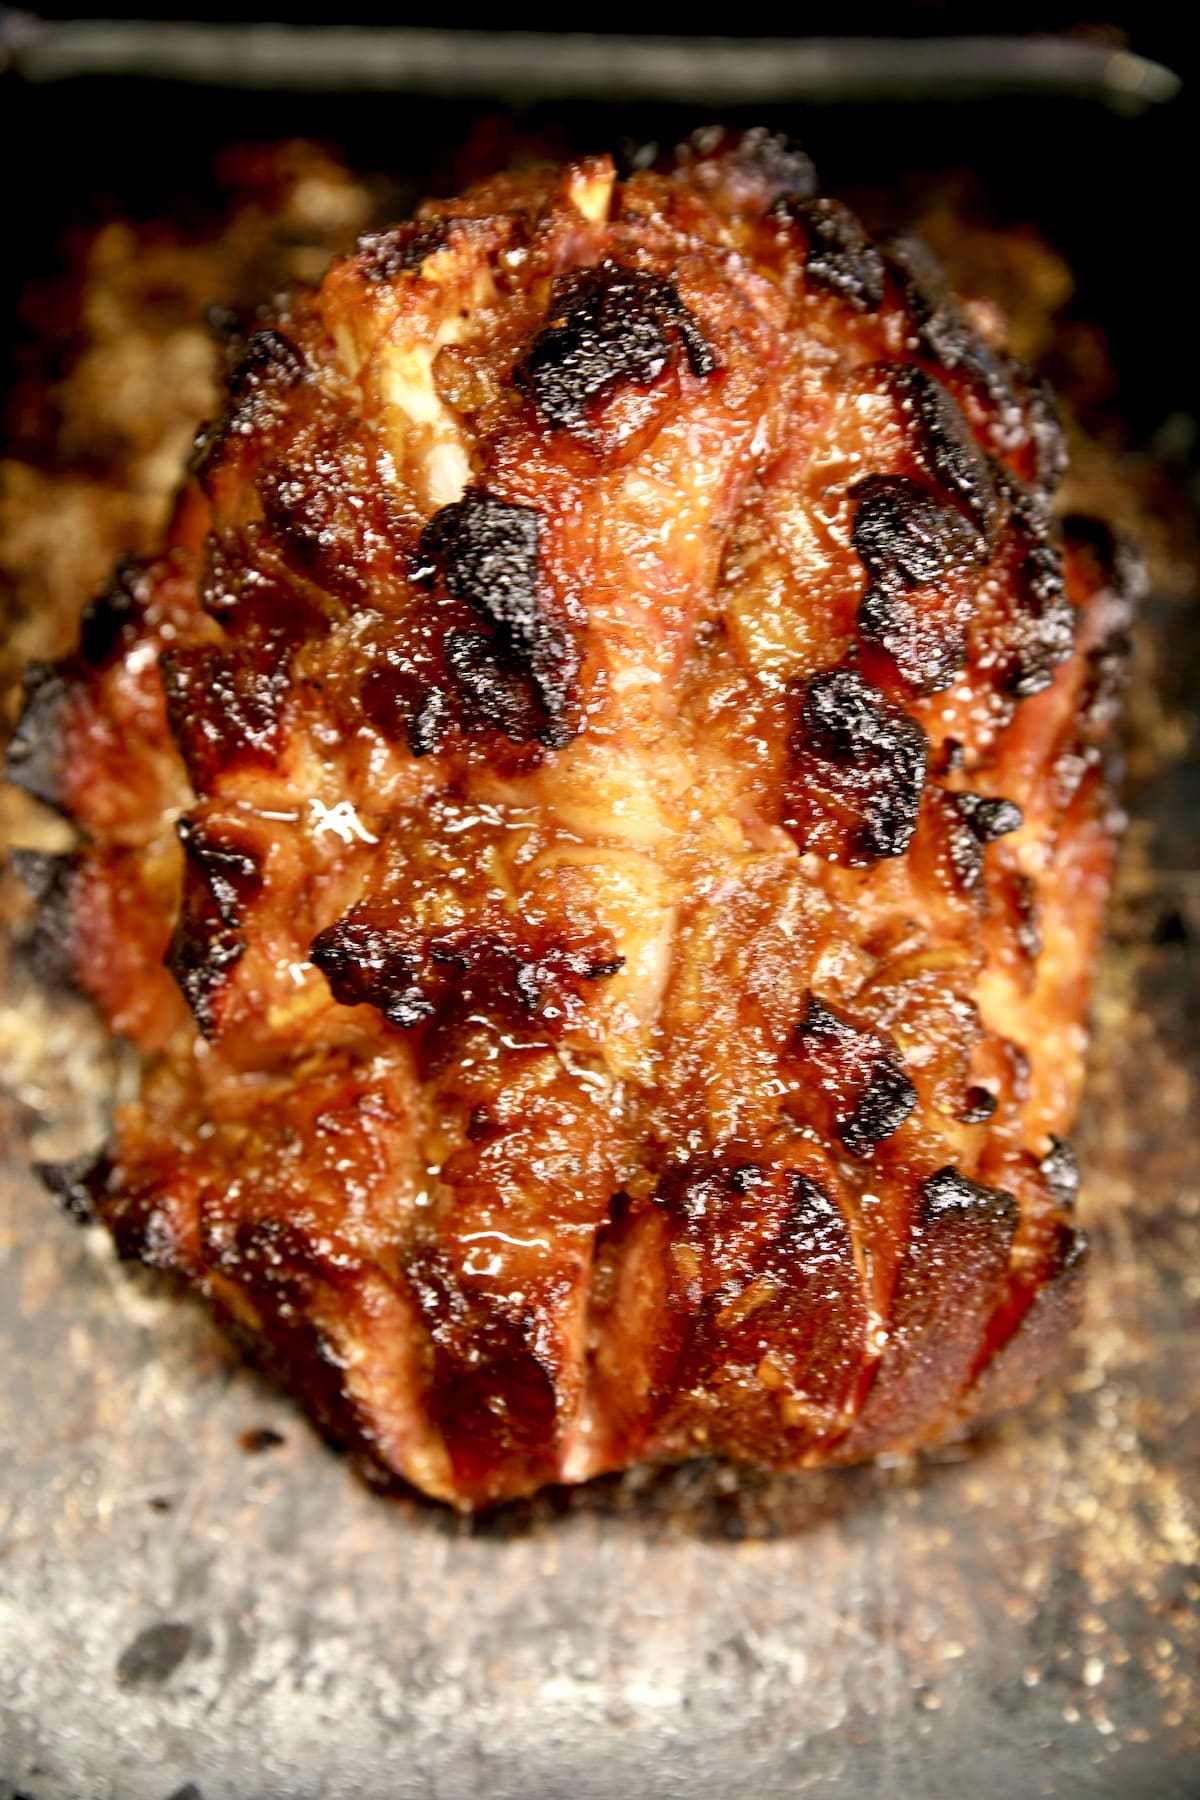 Grilled ham resting on baking sheet.